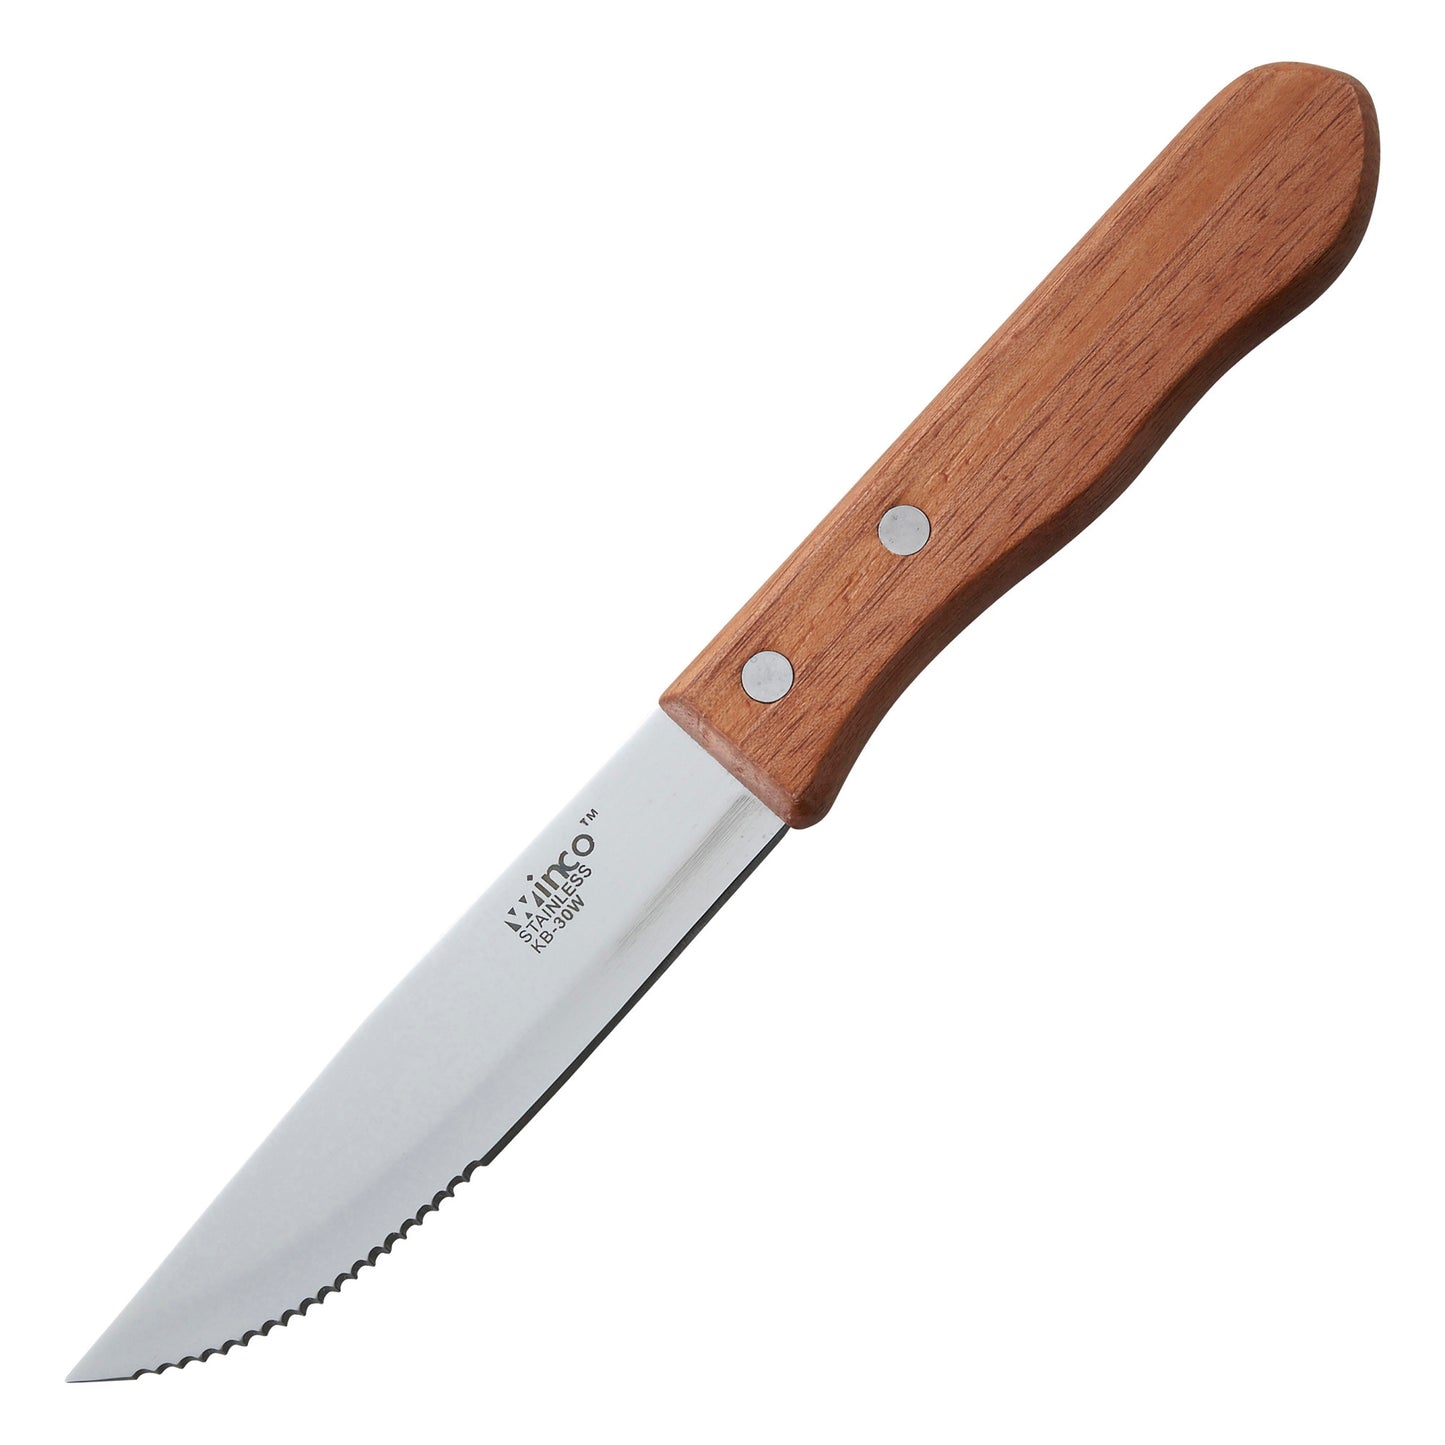 KB-30W - Jumbo Steak Knives, 5" Blade, Wooden Handle, Pointed Tip